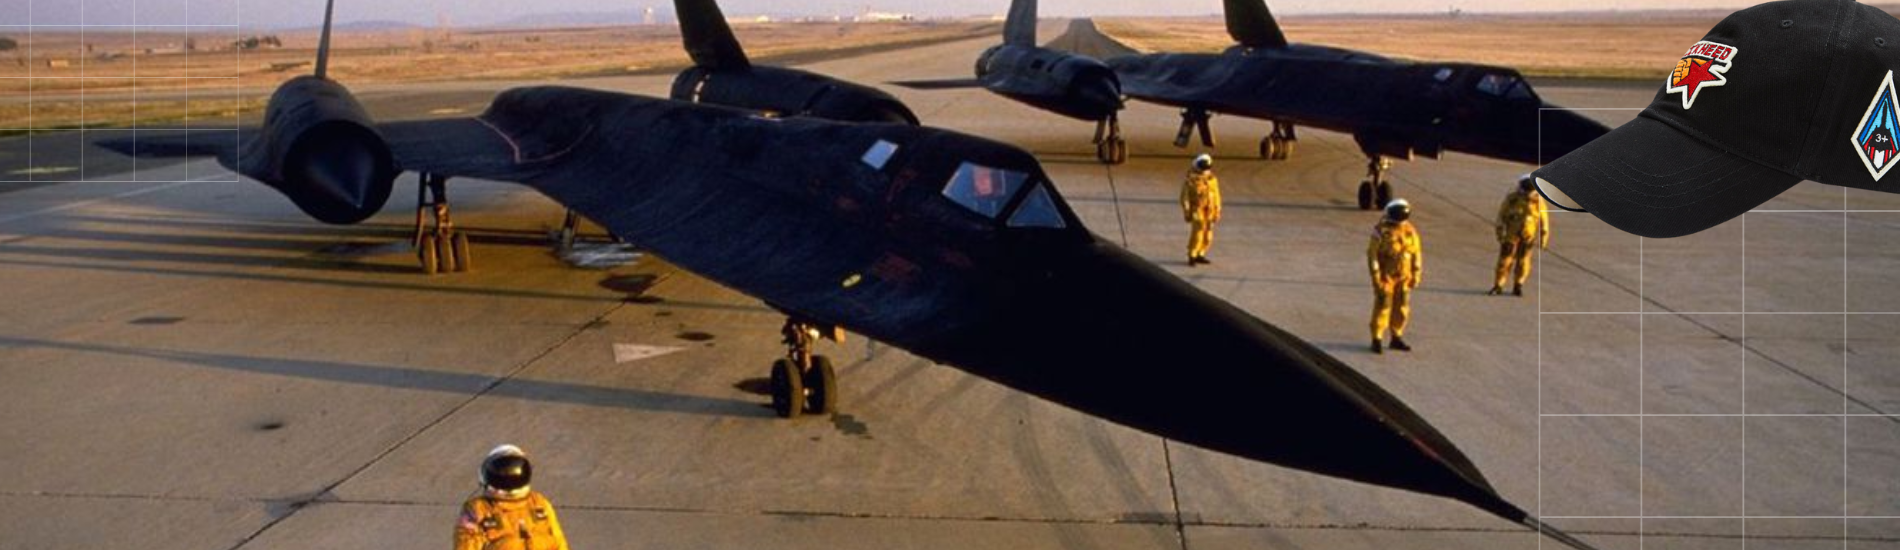 Gorra Canoa Roja Lockheed SR-71 Blackbird